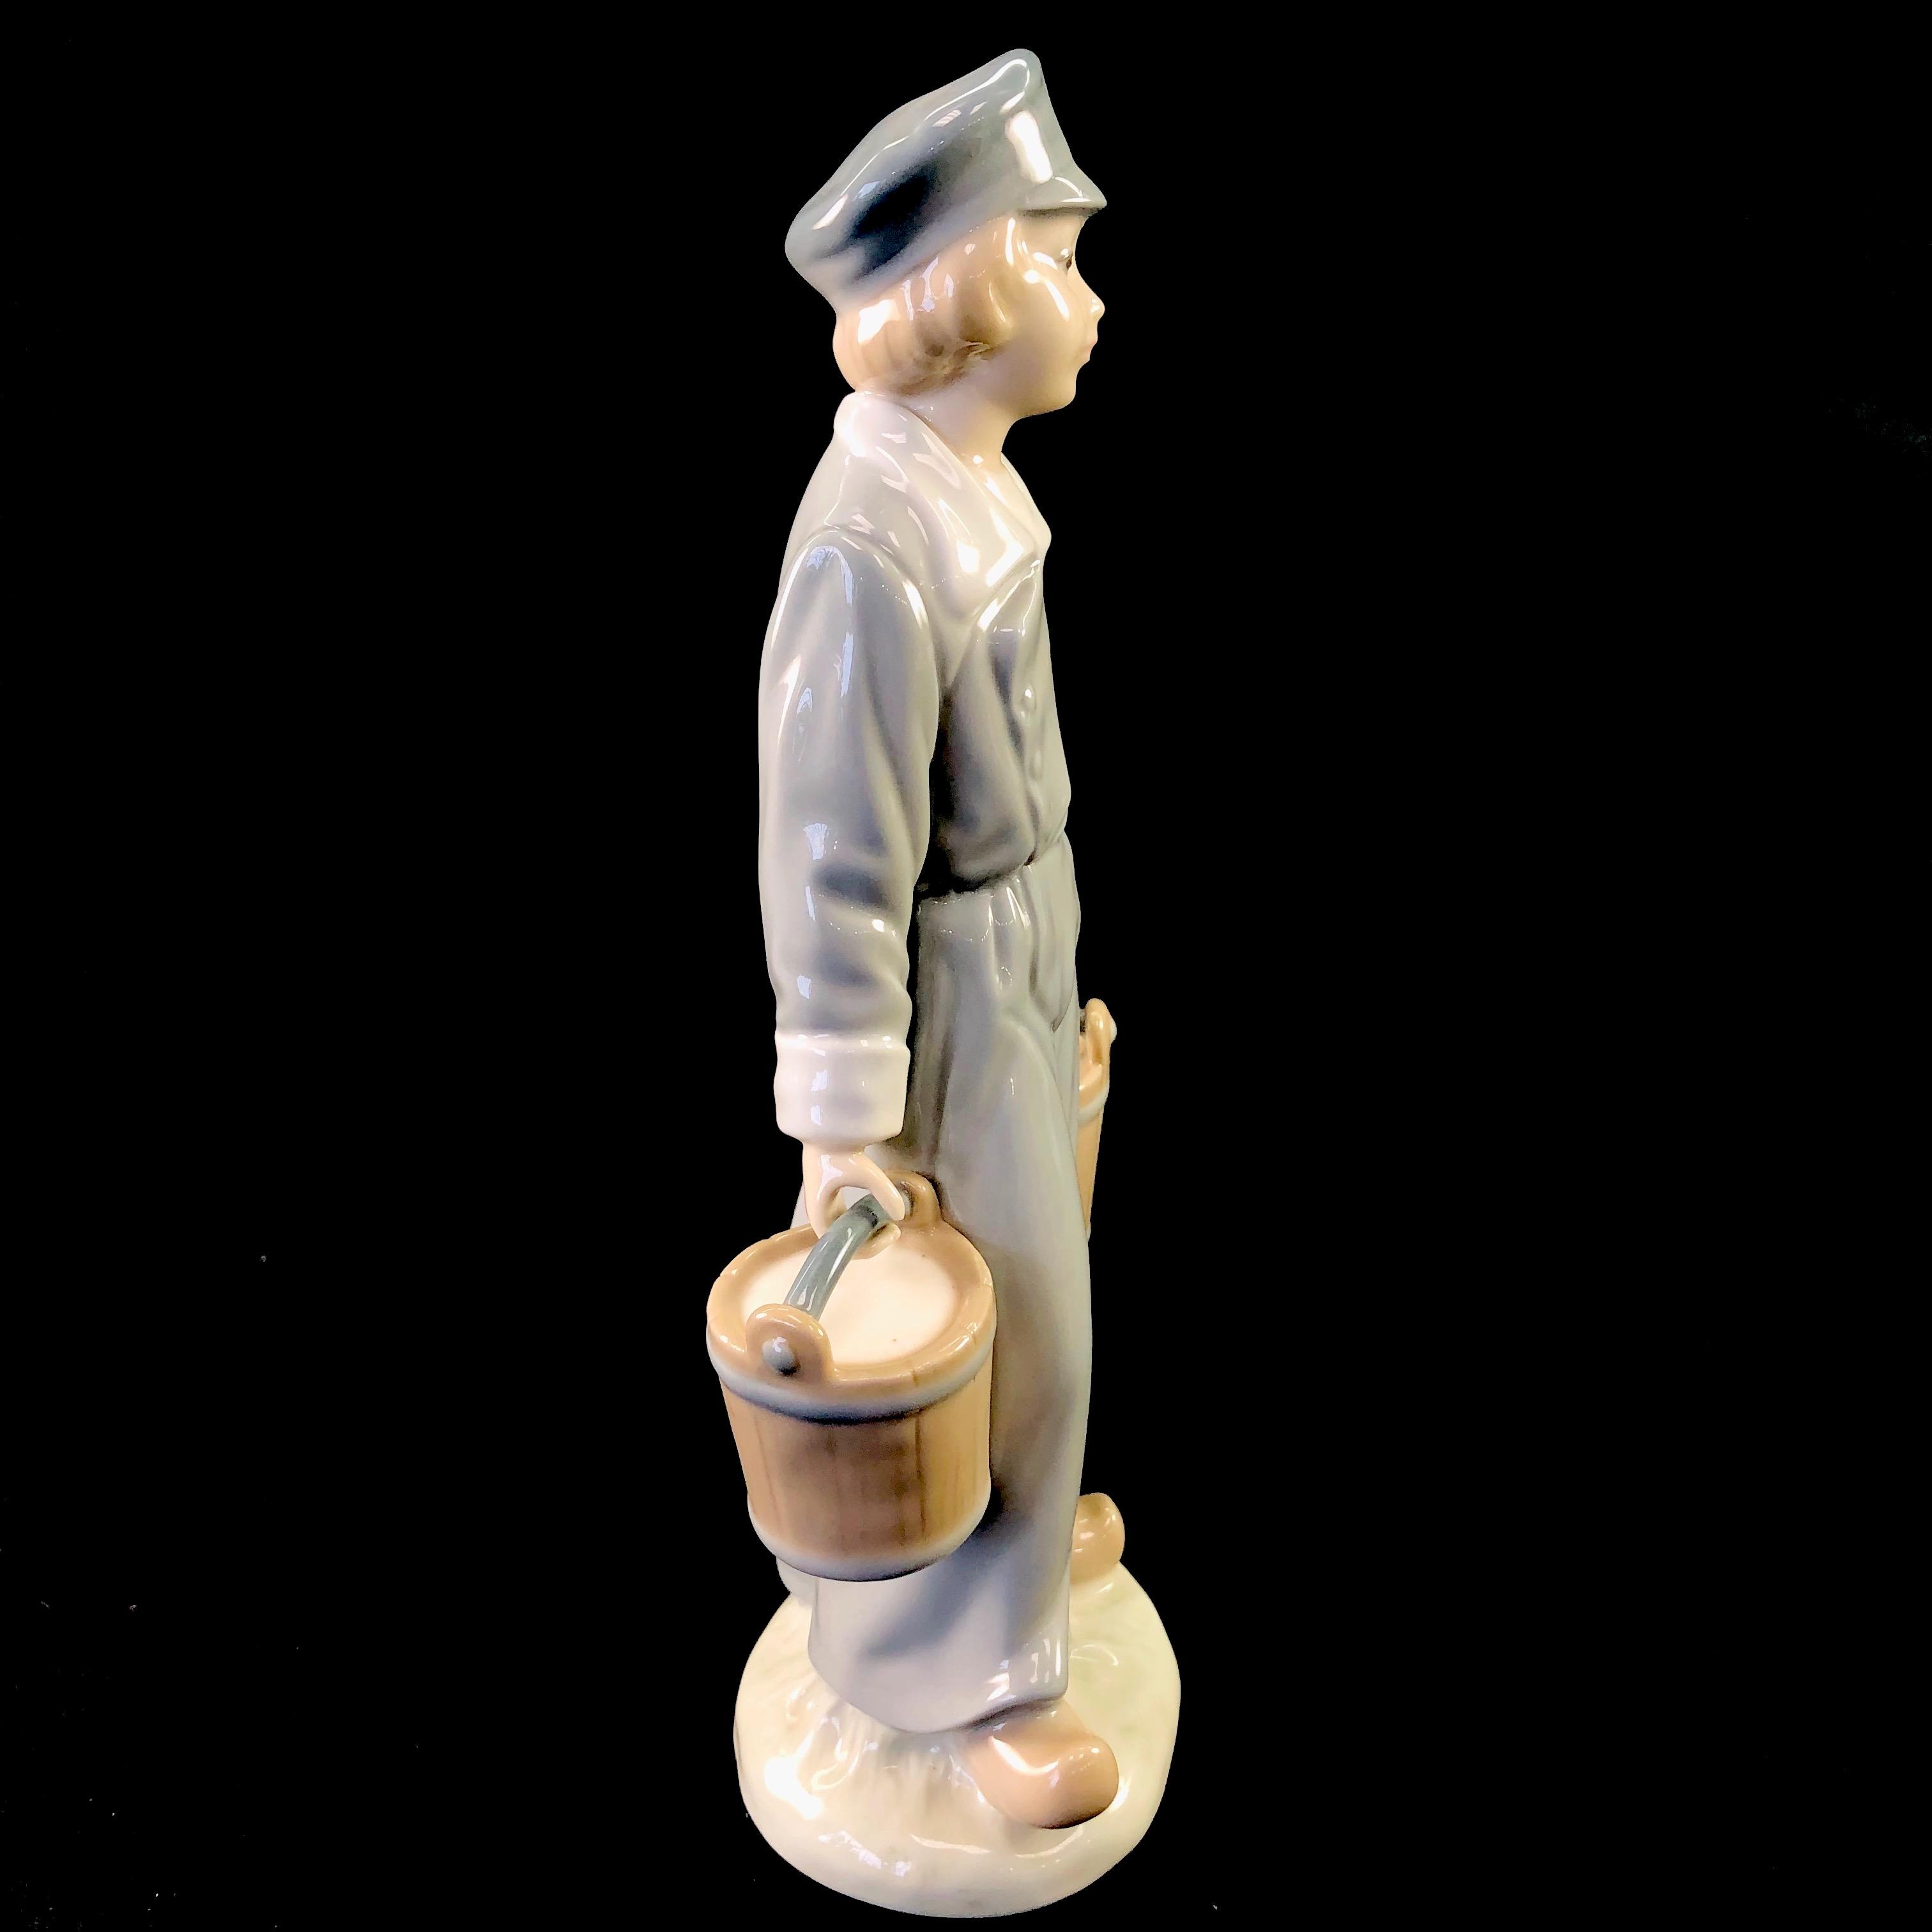 Estate Lladro #4811 "Dutch Boy with Pails" porcelain figurine with original box